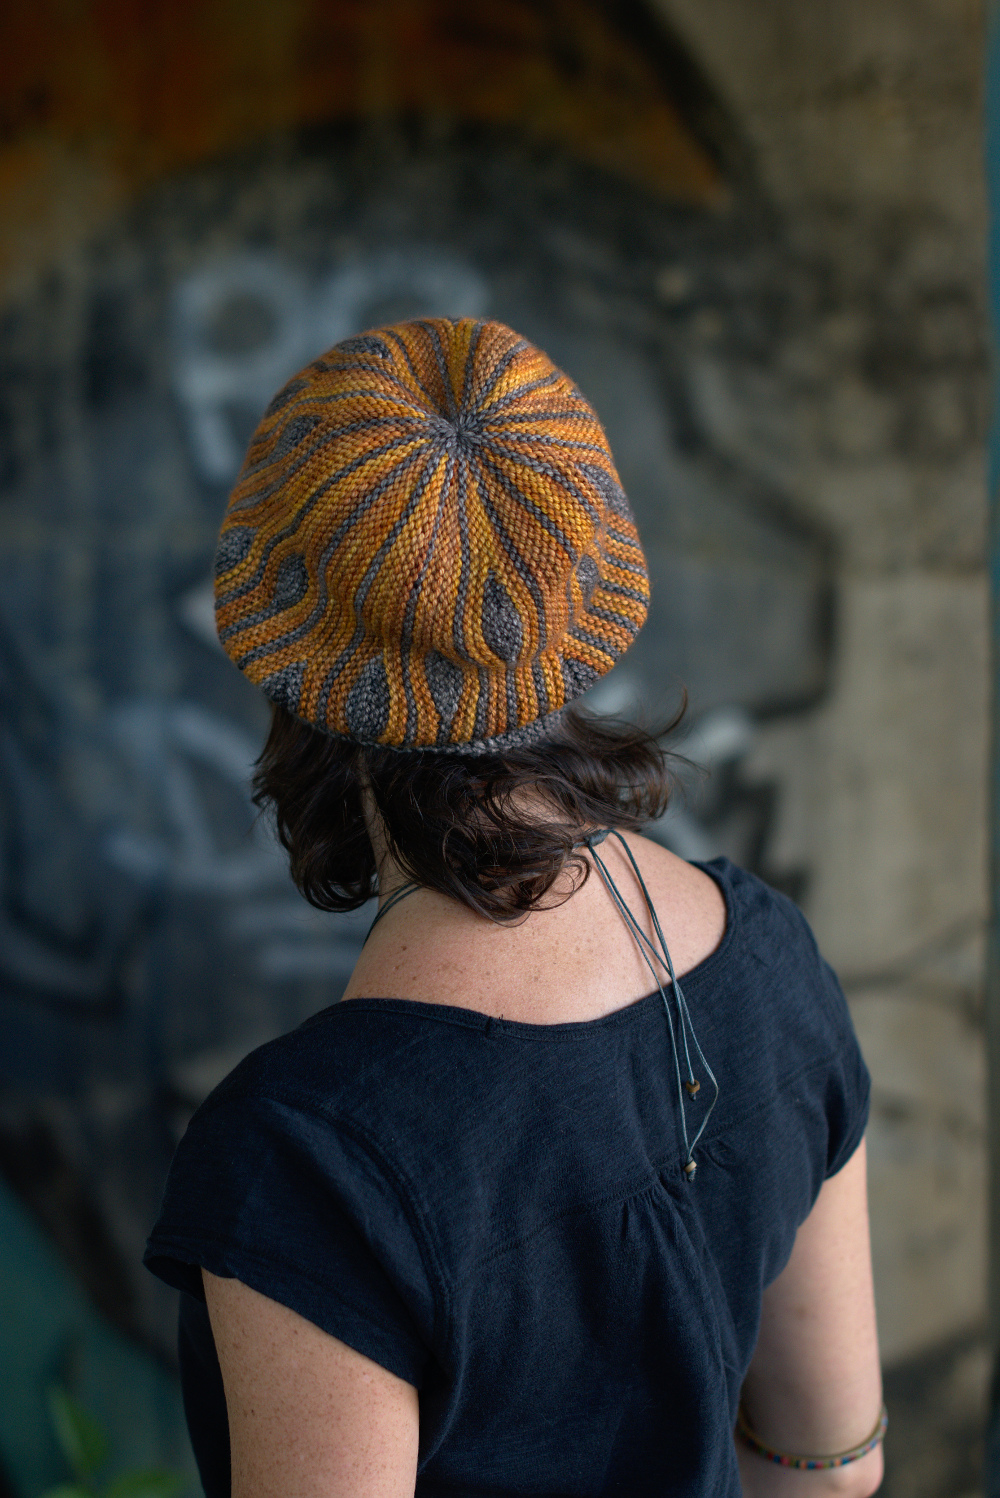 Korra sideways knit short row colourwork hat knitting pattern